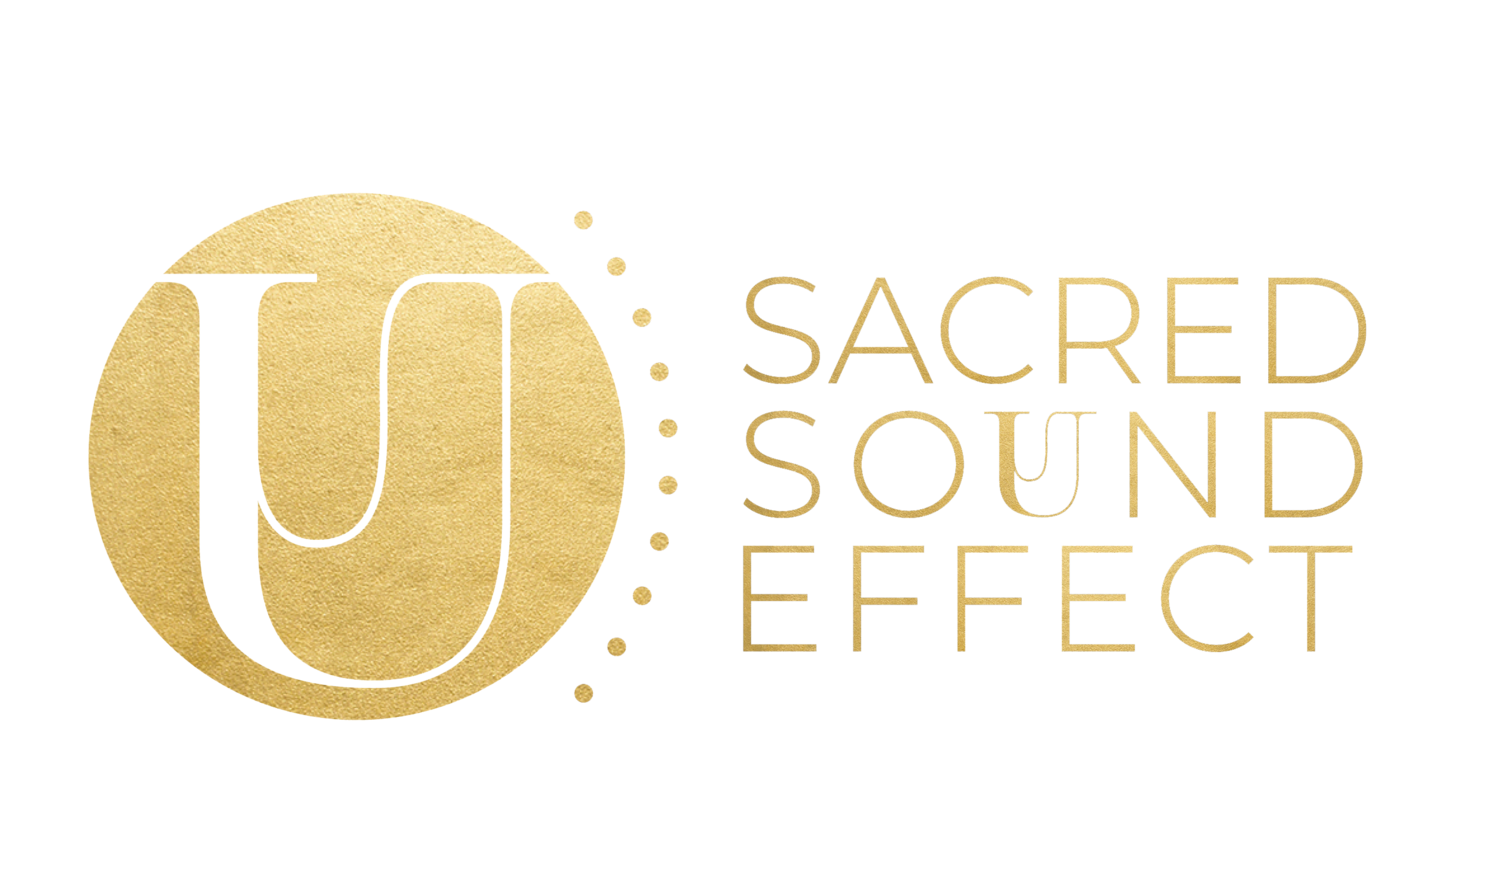 SACRED SOUND EFFECT